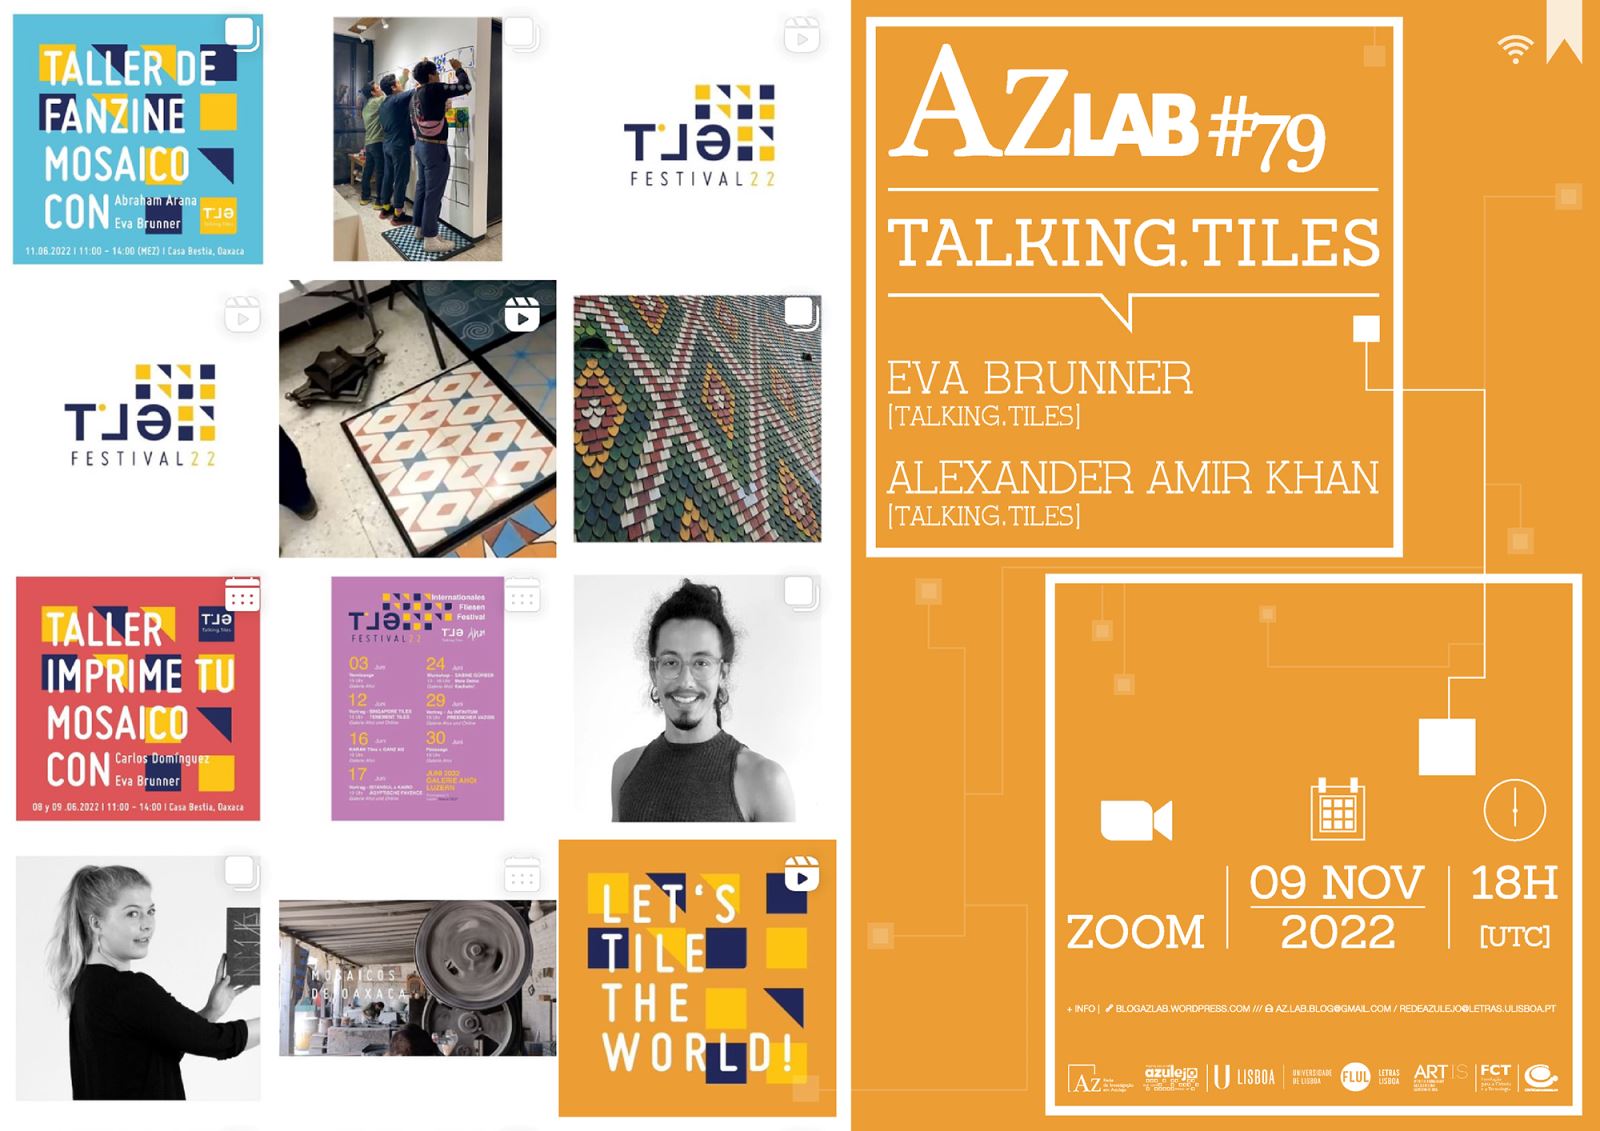 AzLab#79 | TALKING.TILES